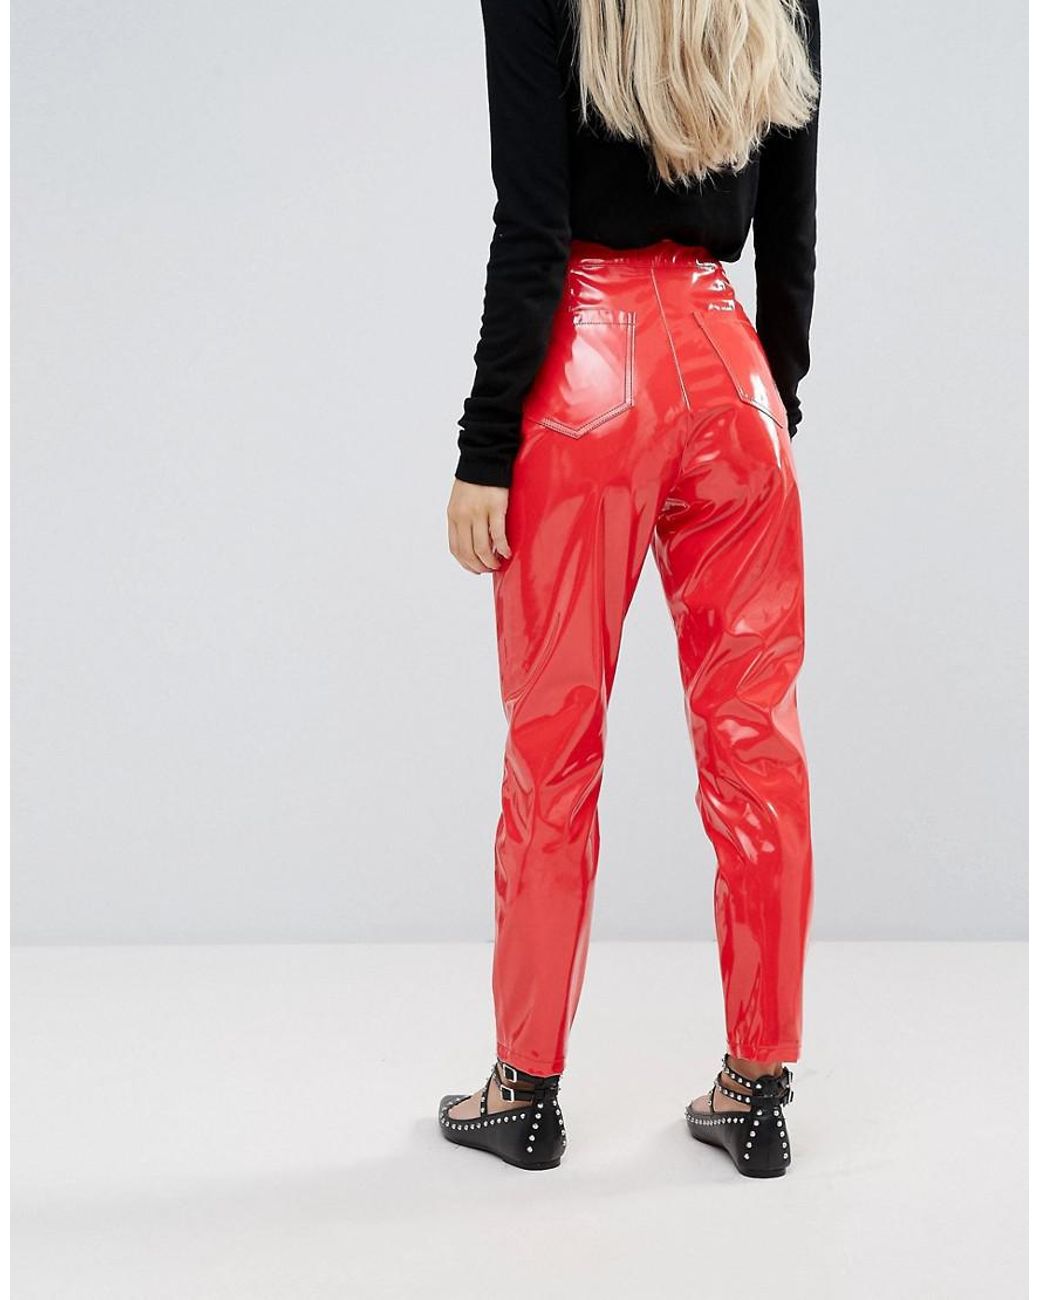 Brand Spanking New Vinyl Pants  Red  Fashion Nova Pants  Fashion Nova